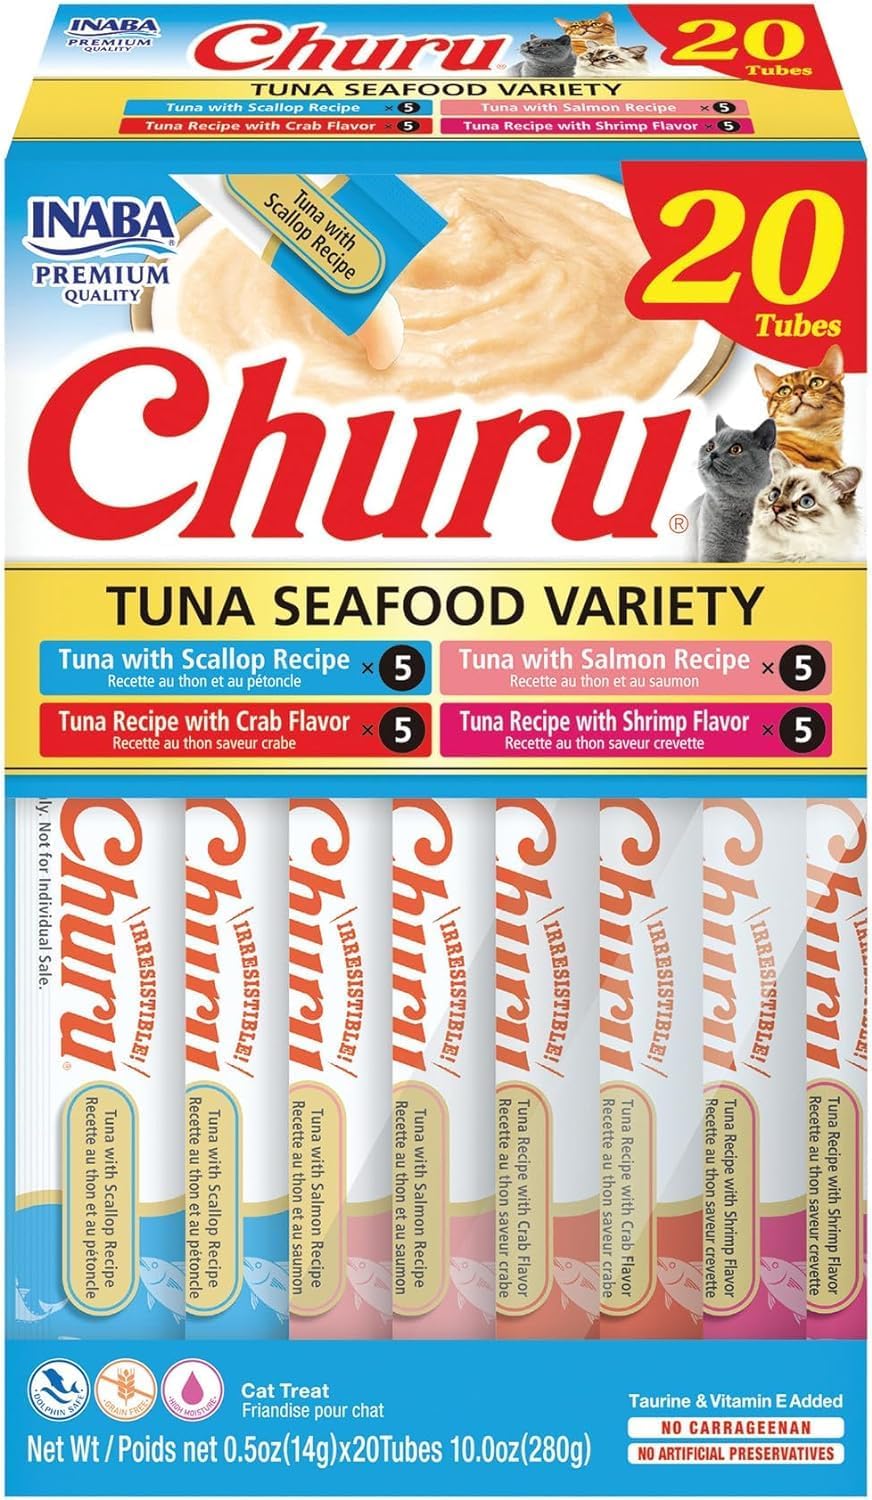 INABA Churu Cat Treats, Lickable, Squeezable Creamy Purée Cat Treat with Green Tea Extract & Taurine, 0.5 Ounces Each Tube, 20 Tubes, Tuna & Seafood Variety Box